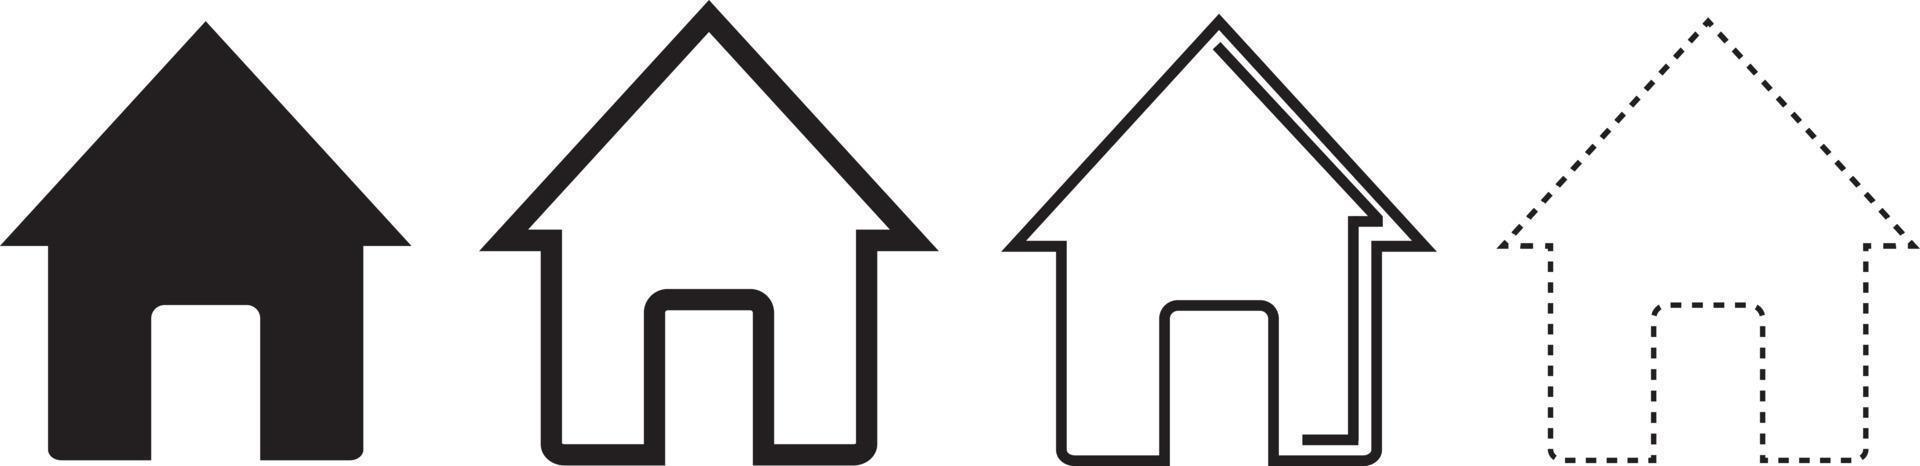 Haus-Vektor-Icons. satz schwarze haussymbole vektor